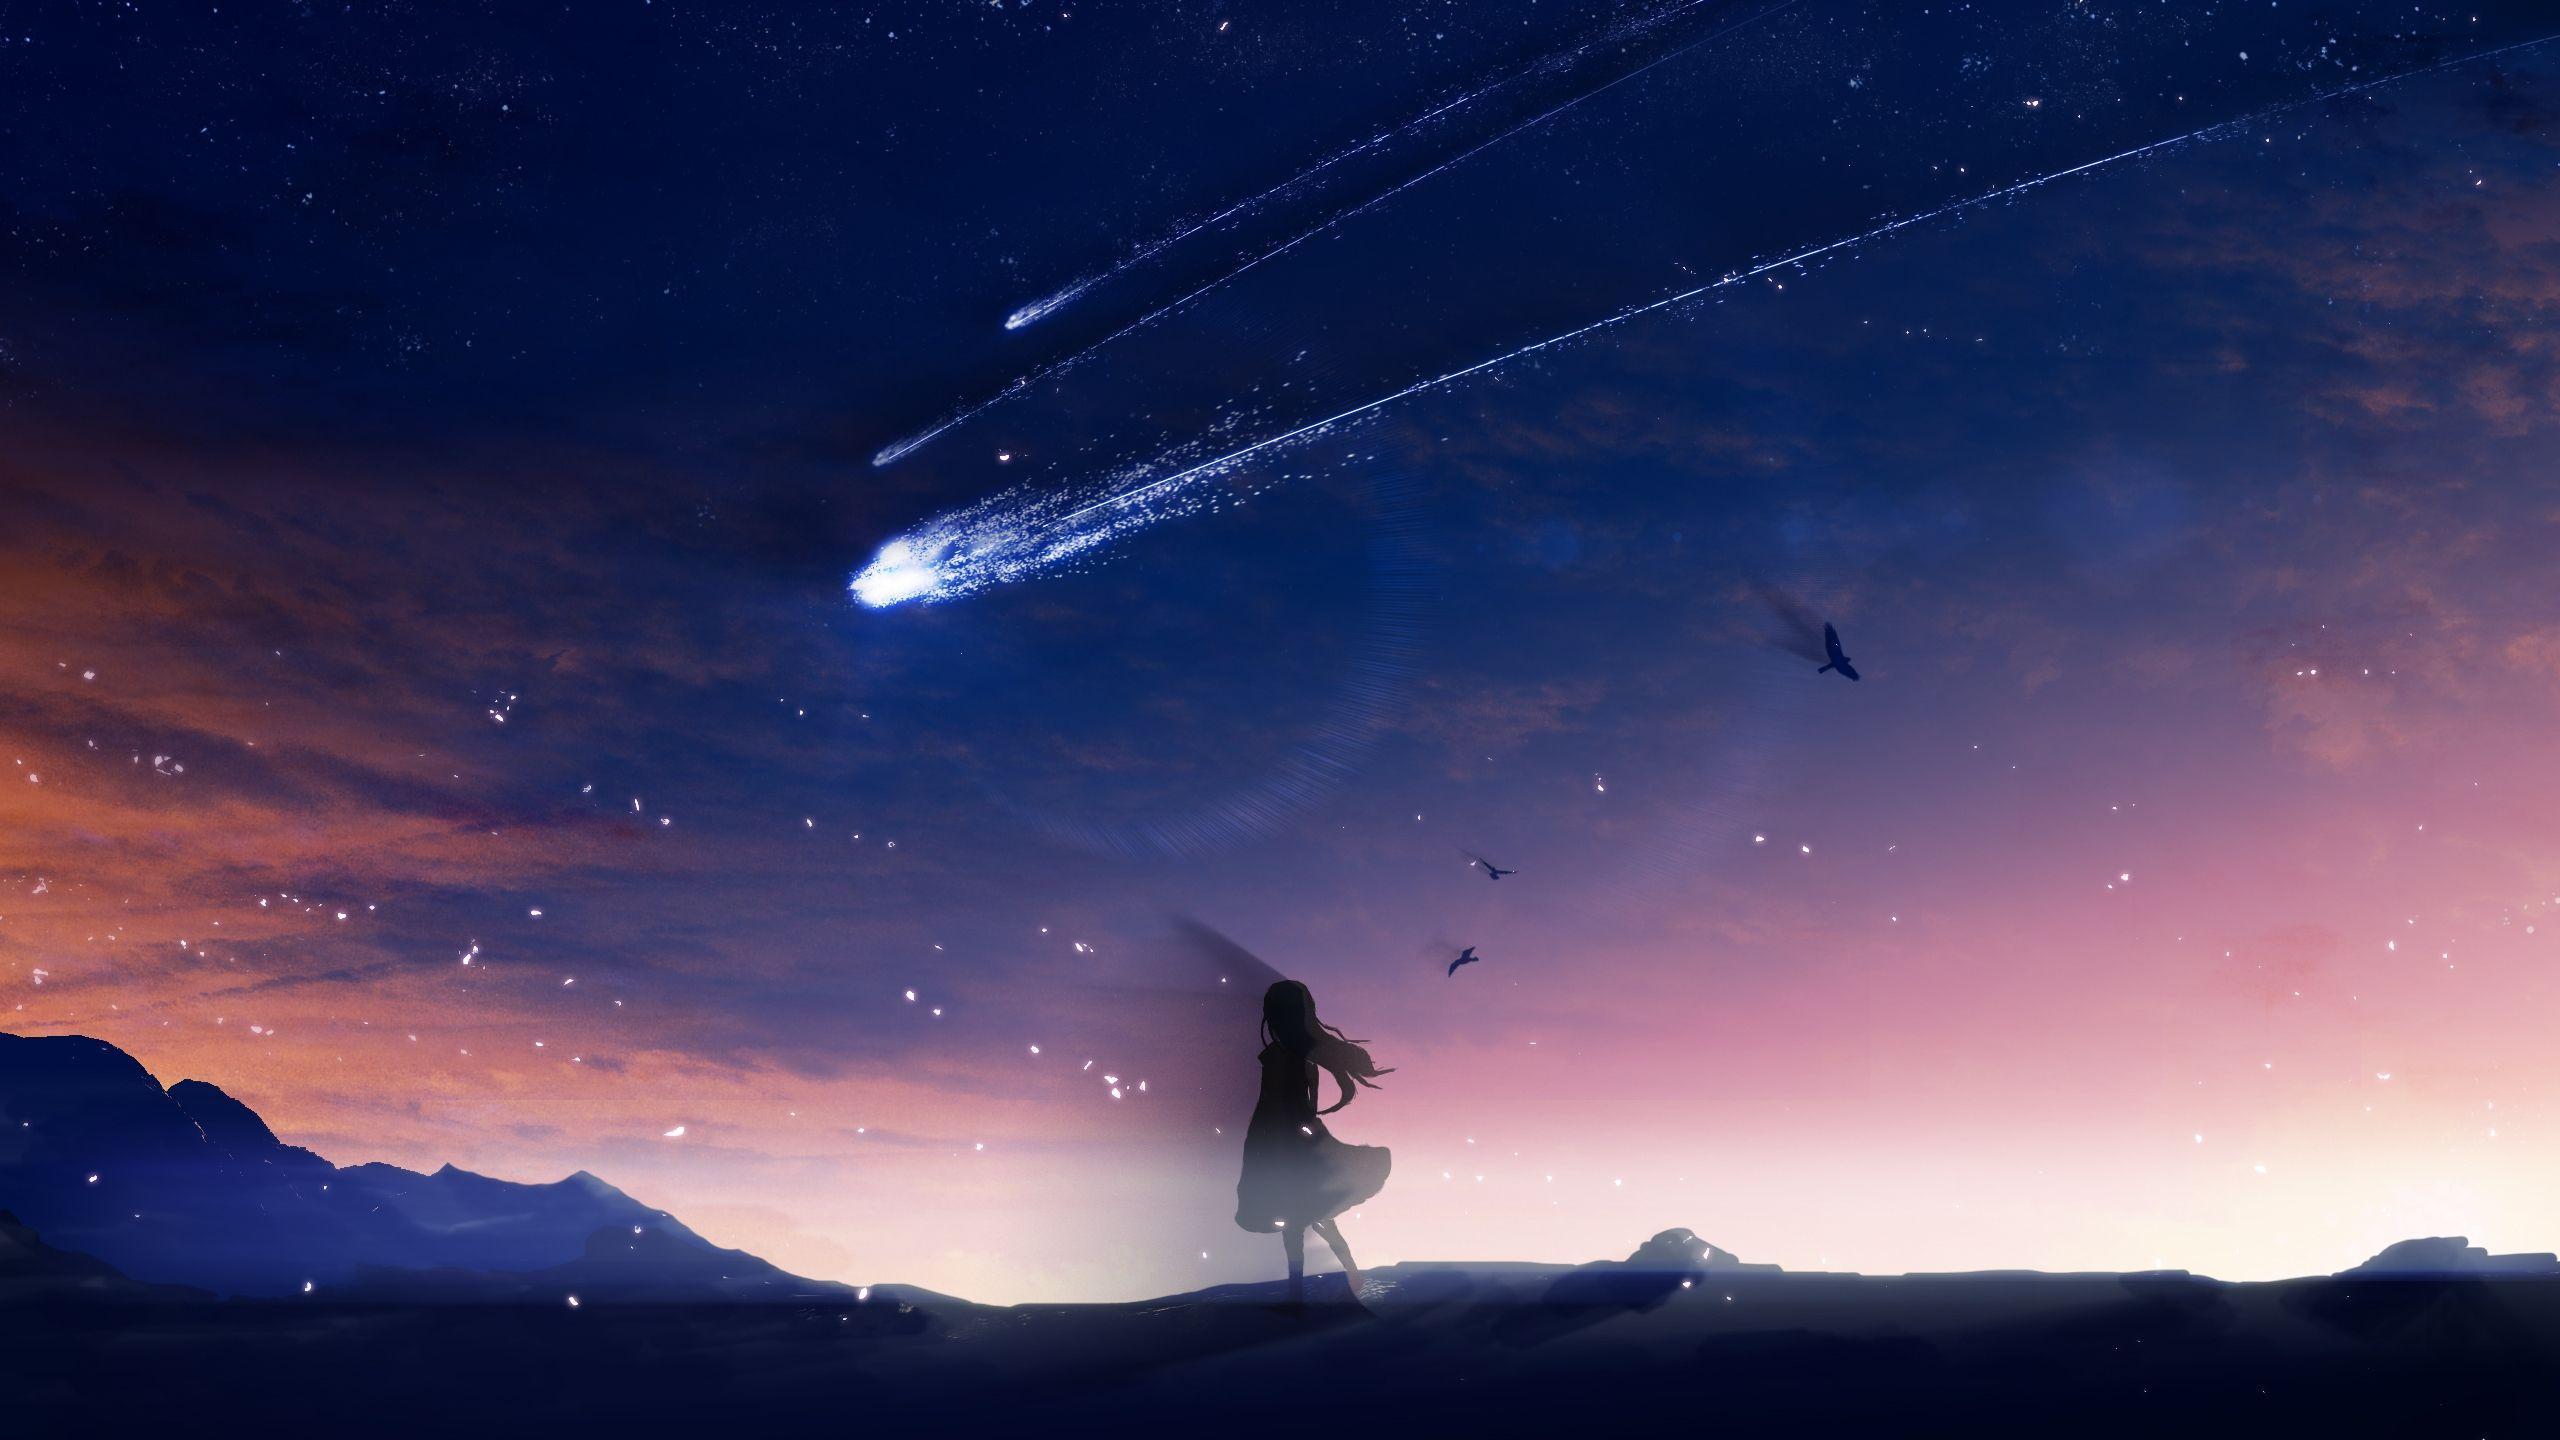 Anime Sky Wallpapers - Top Free Anime Sky Backgrounds ...